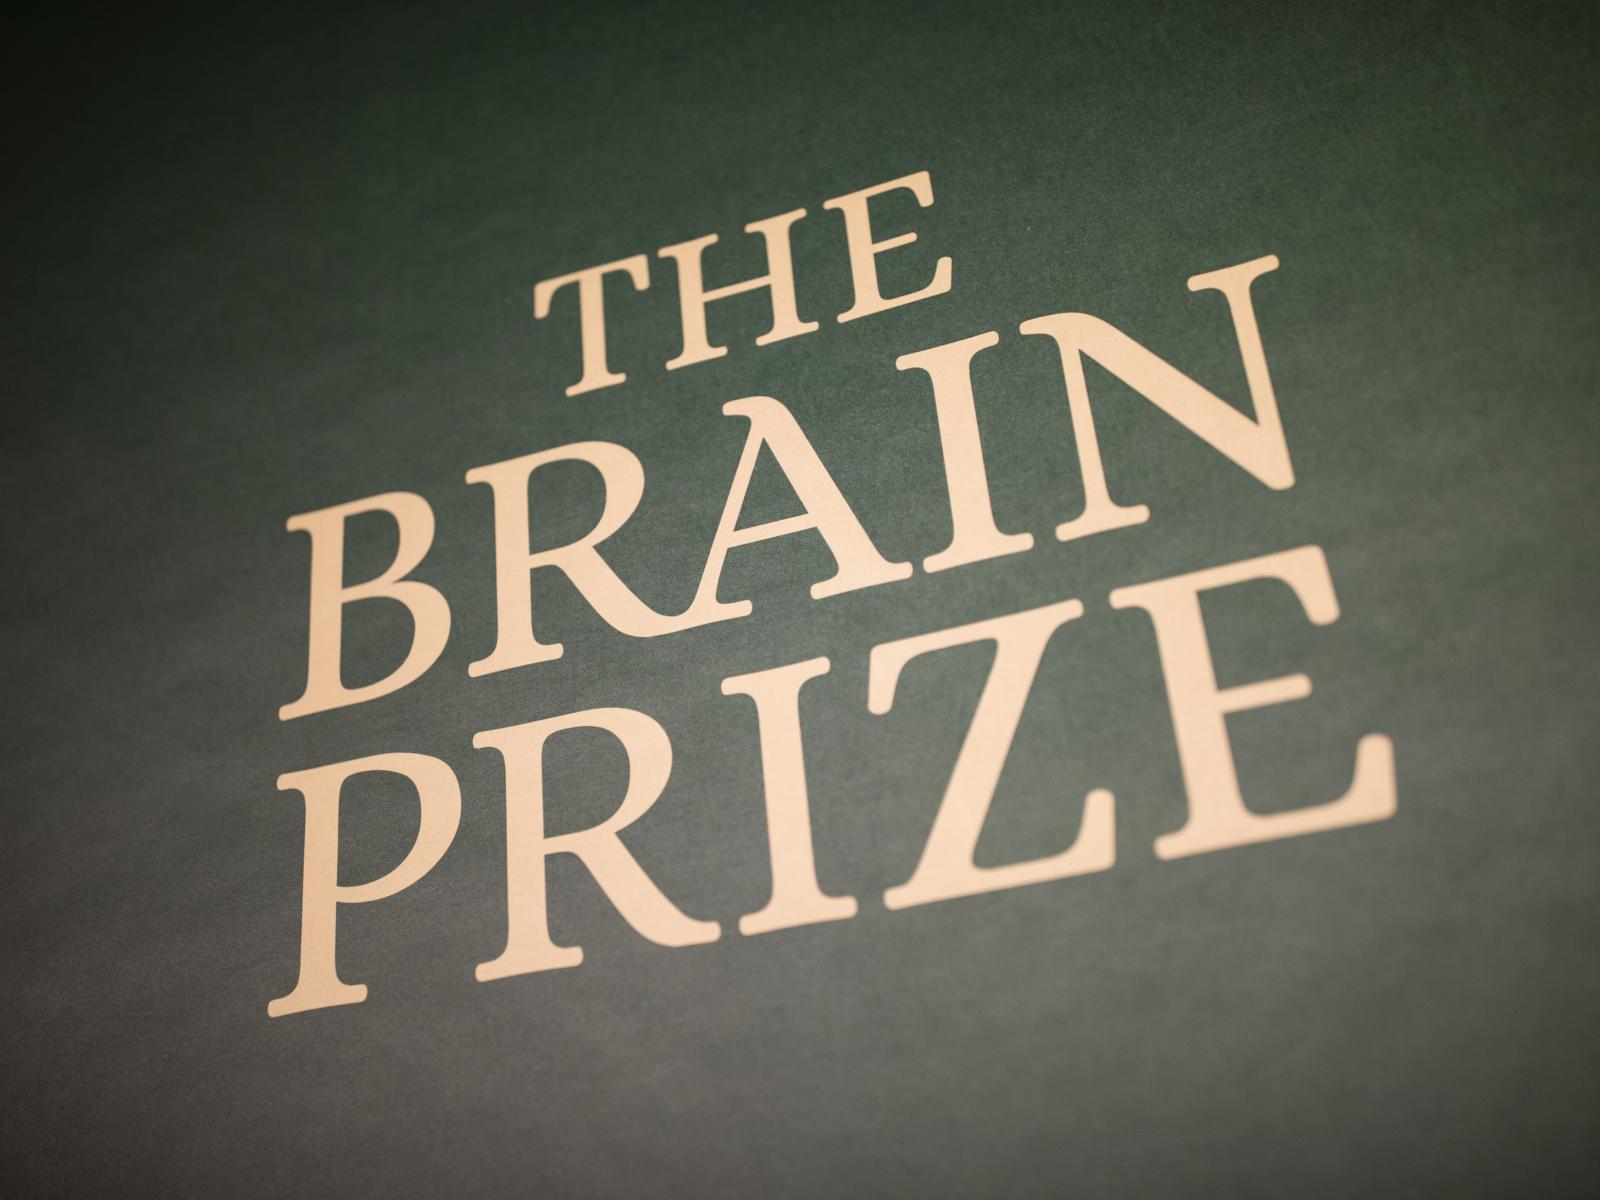 The Brain Prize The Lundbeck Foundation